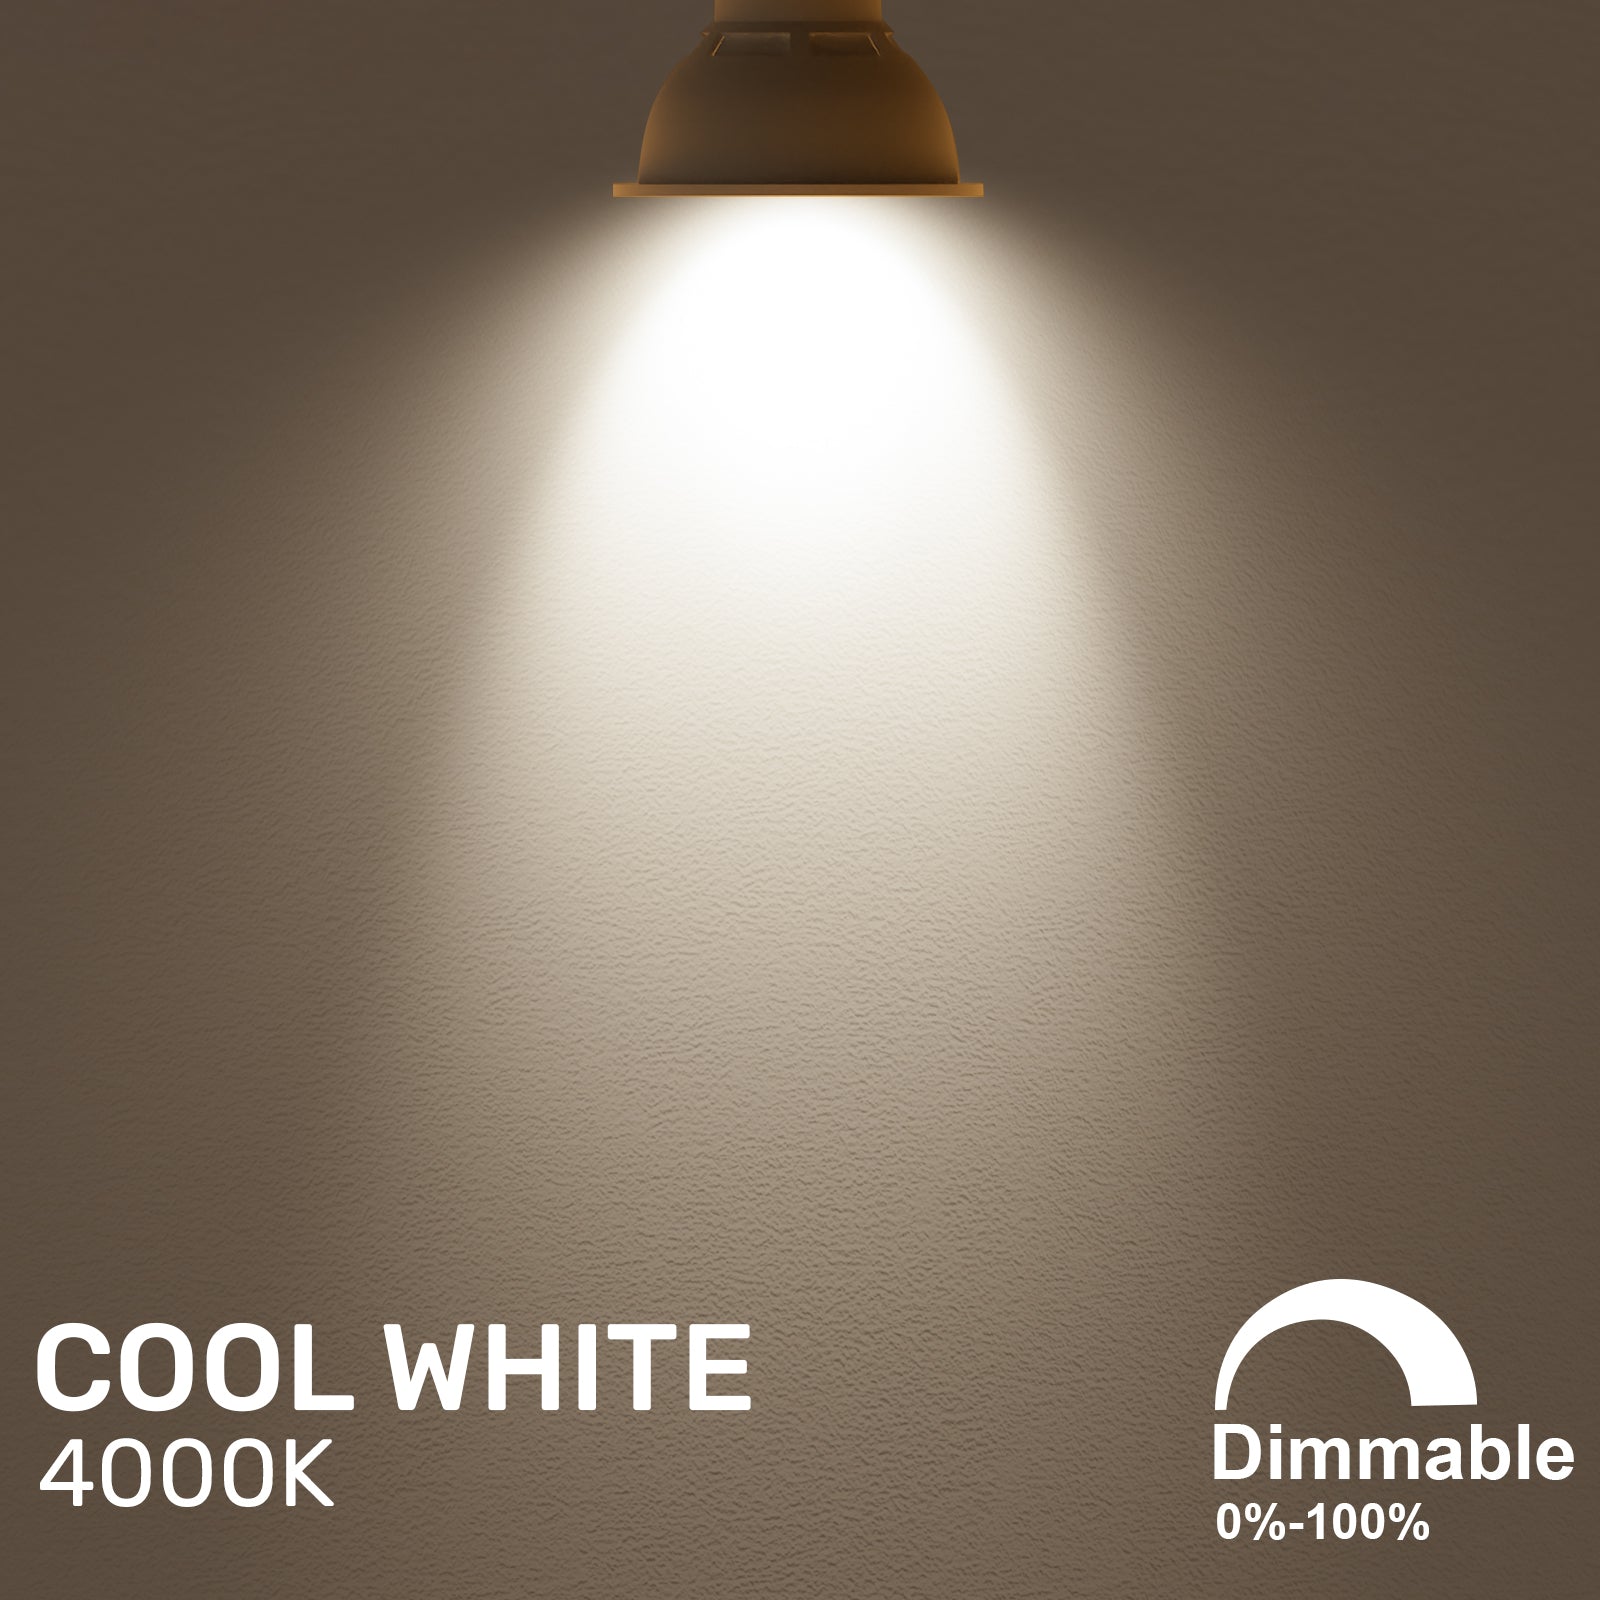 LED Dimmable L007 Spotlight 4.5W (50w), GU10, 345 Lumens, Cool White(4000K), 240V